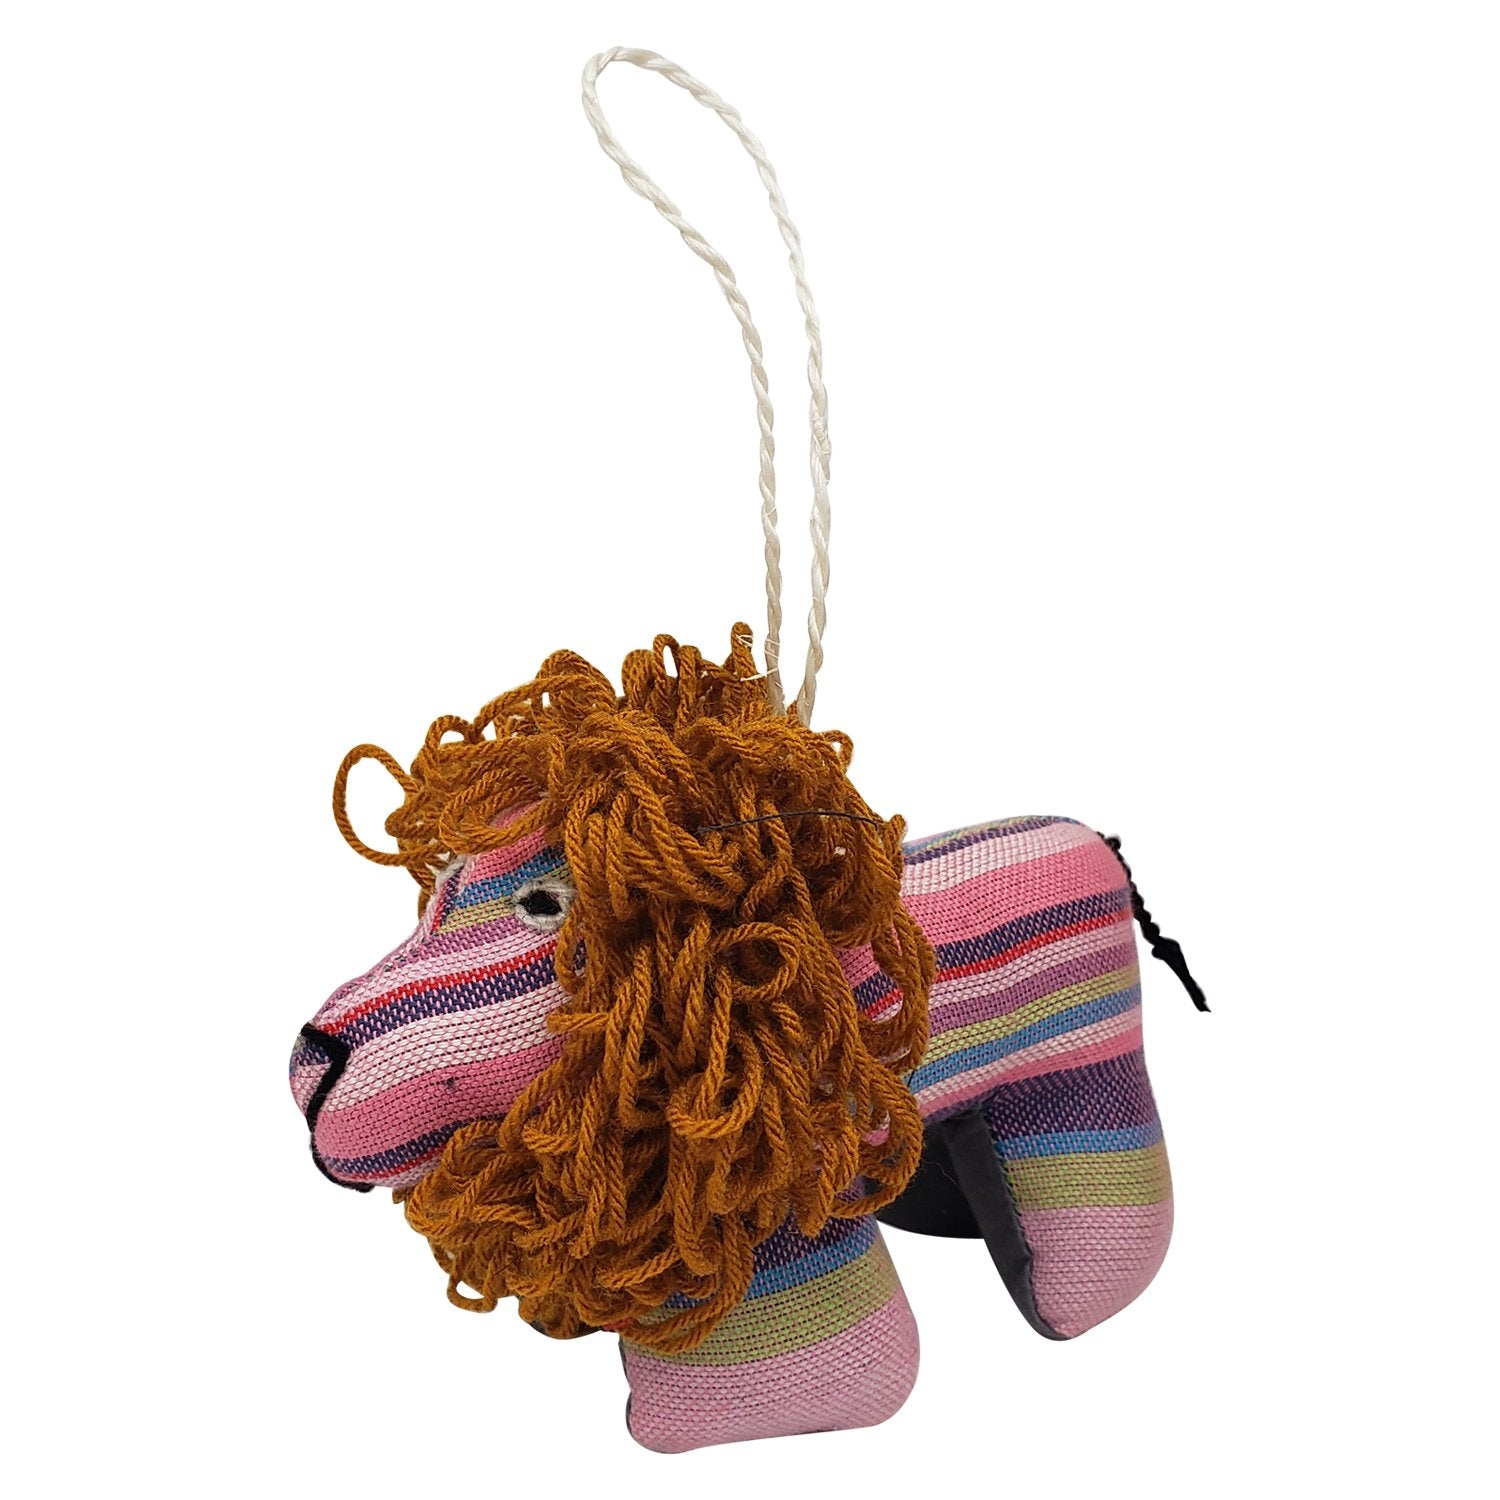 3 of 3: Lion: Authentic African Handmade Kikoi Fabric Stuffed Animal Christmas Ornament